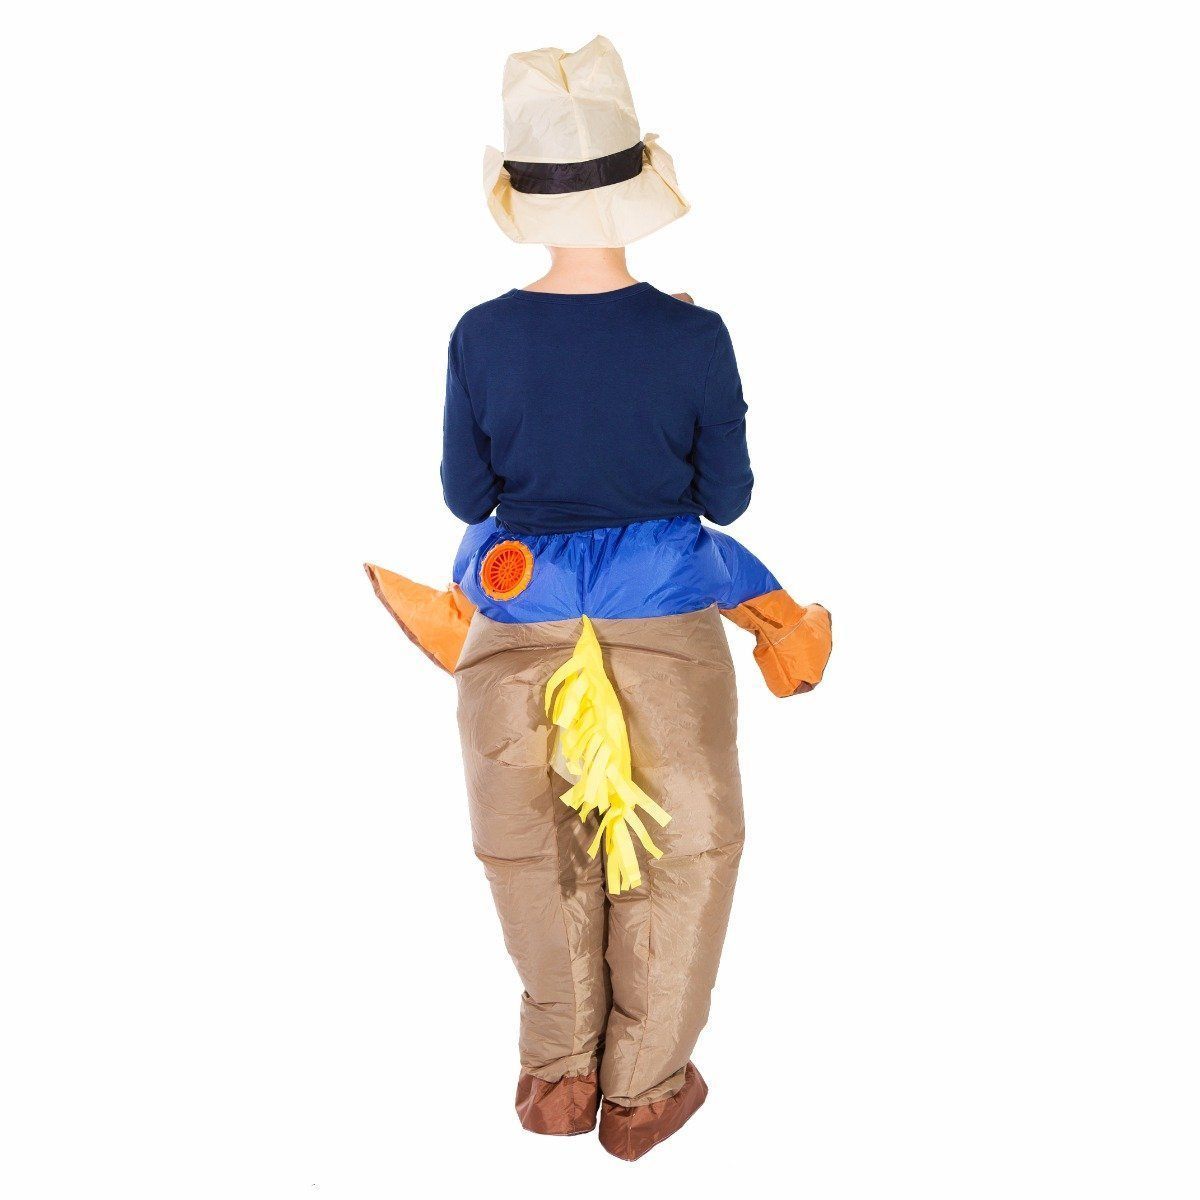 Fancy Dress - Kids Inflatable Cowboy Costume